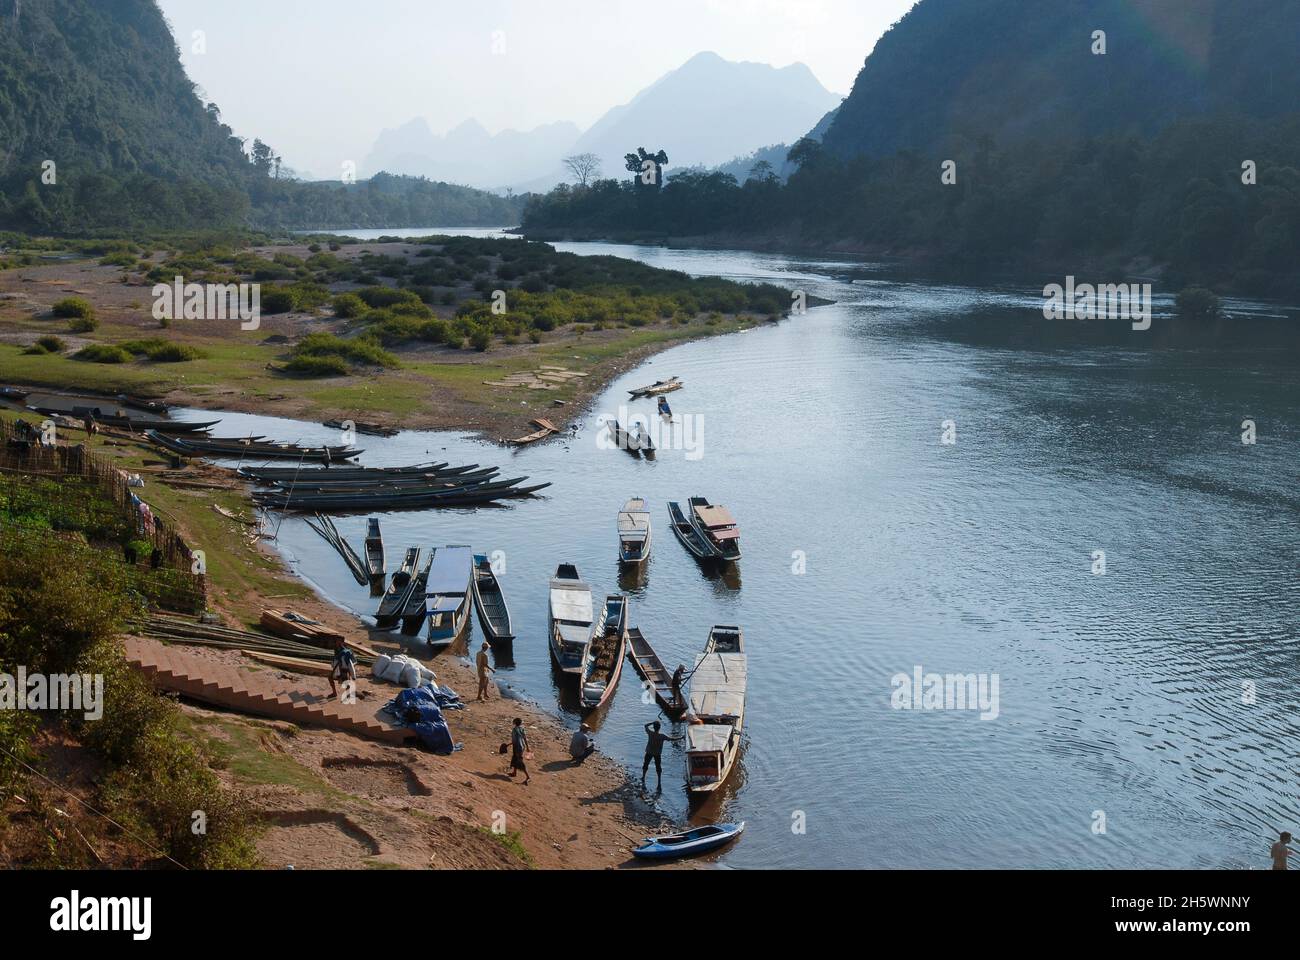 LAO PDR, fiume Nam ou , un ramo del fiume Mekong / LAOS, Nam ou Fluß, ein Nebenfluß des Mekong, Ort Muang Ngoi Foto Stock